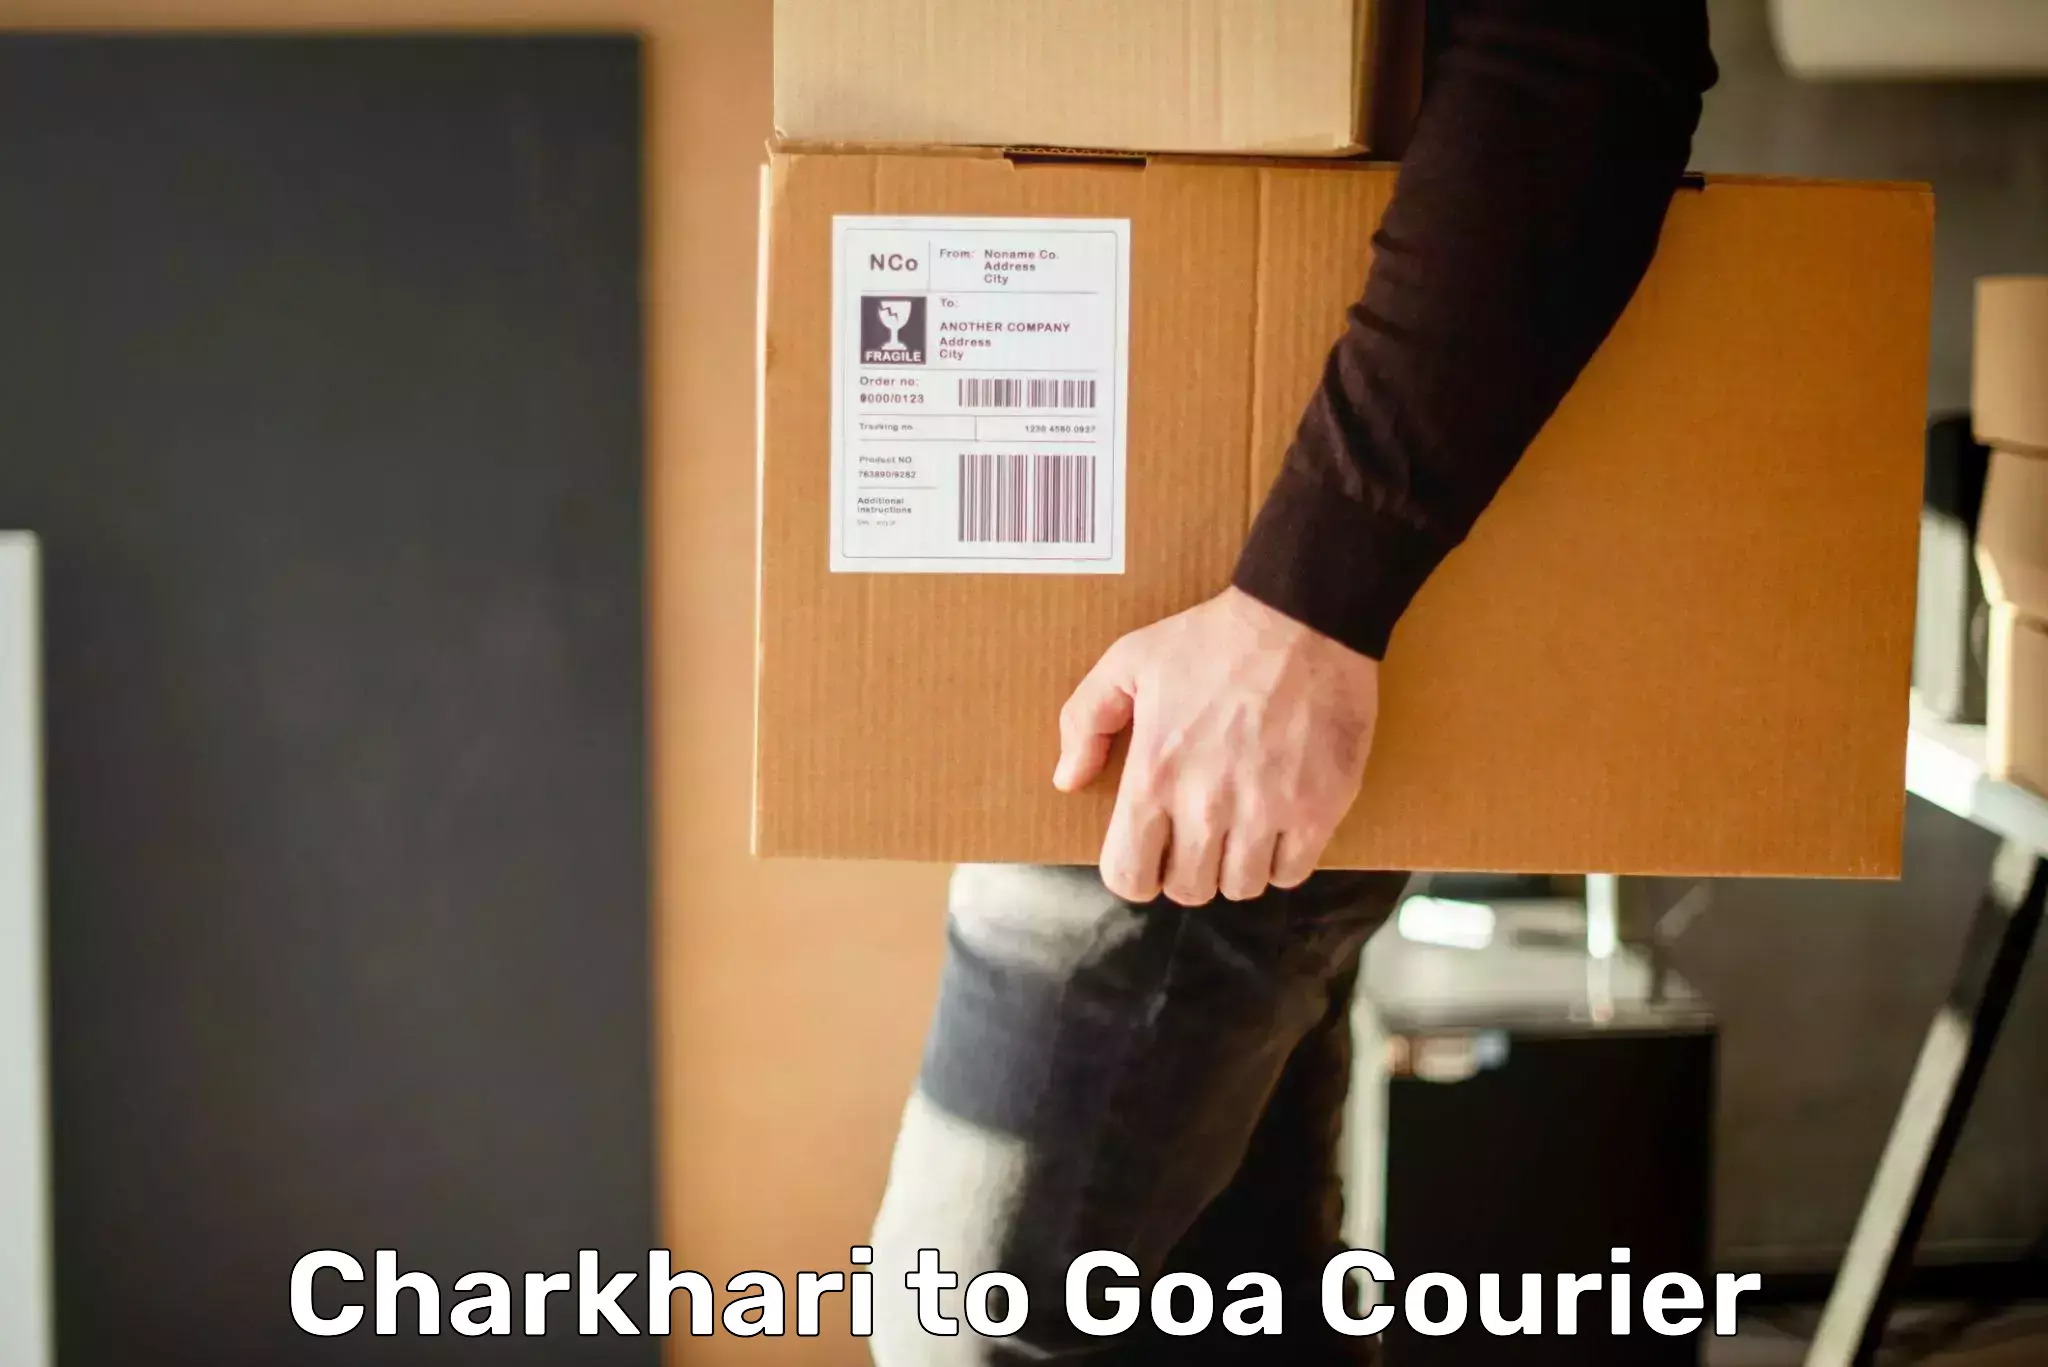 Global logistics network Charkhari to Goa